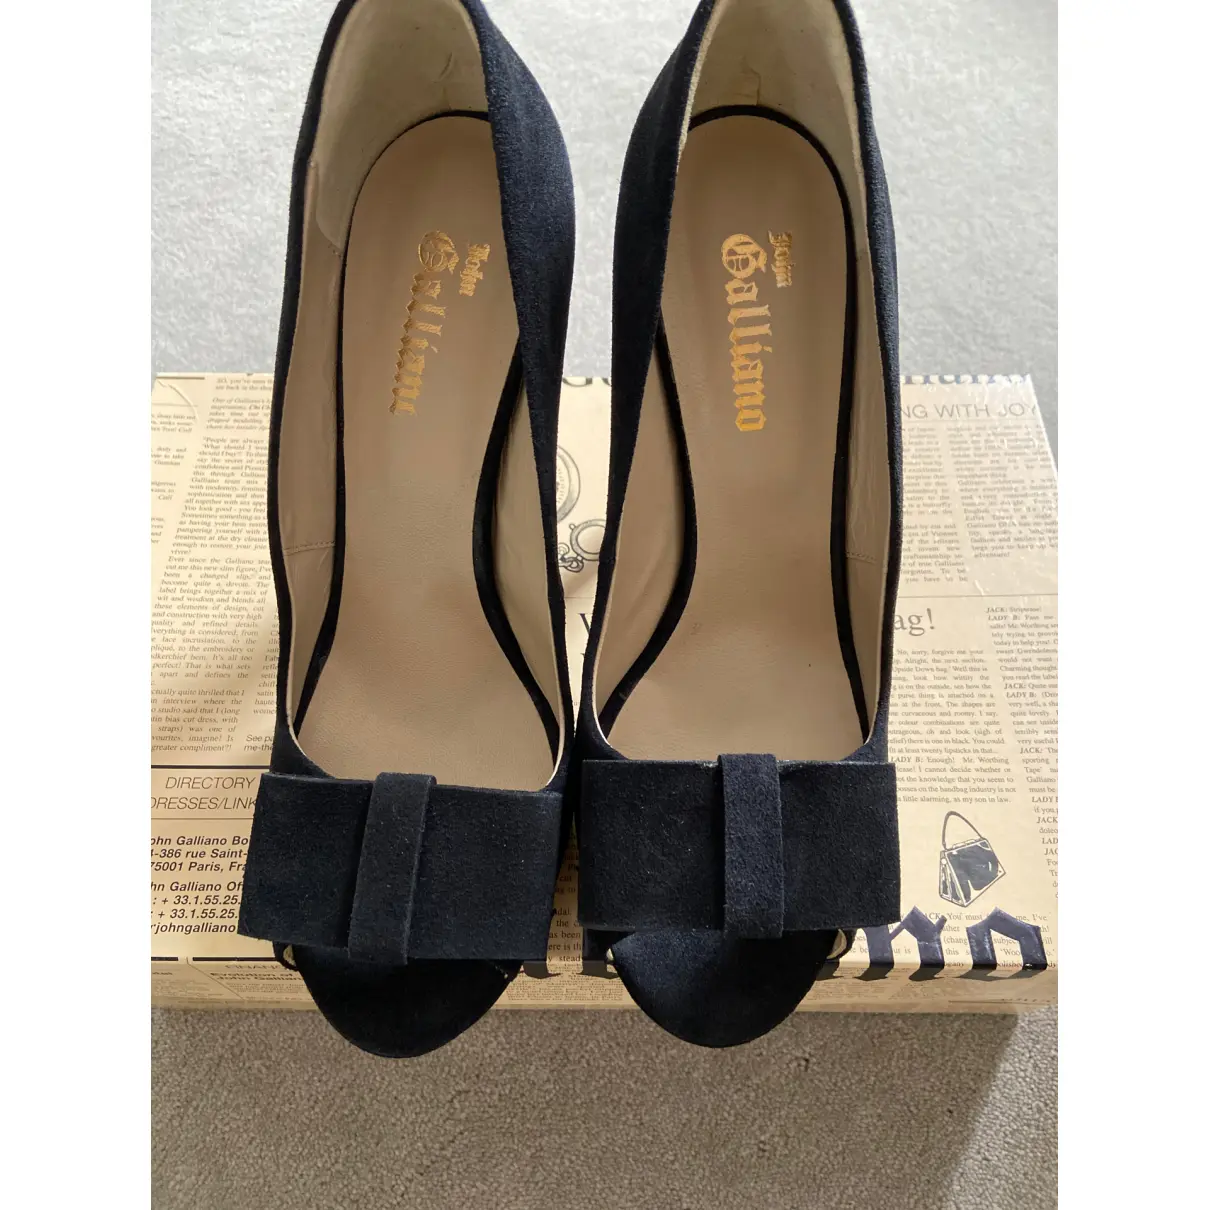 Buy John Galliano Heels online - Vintage